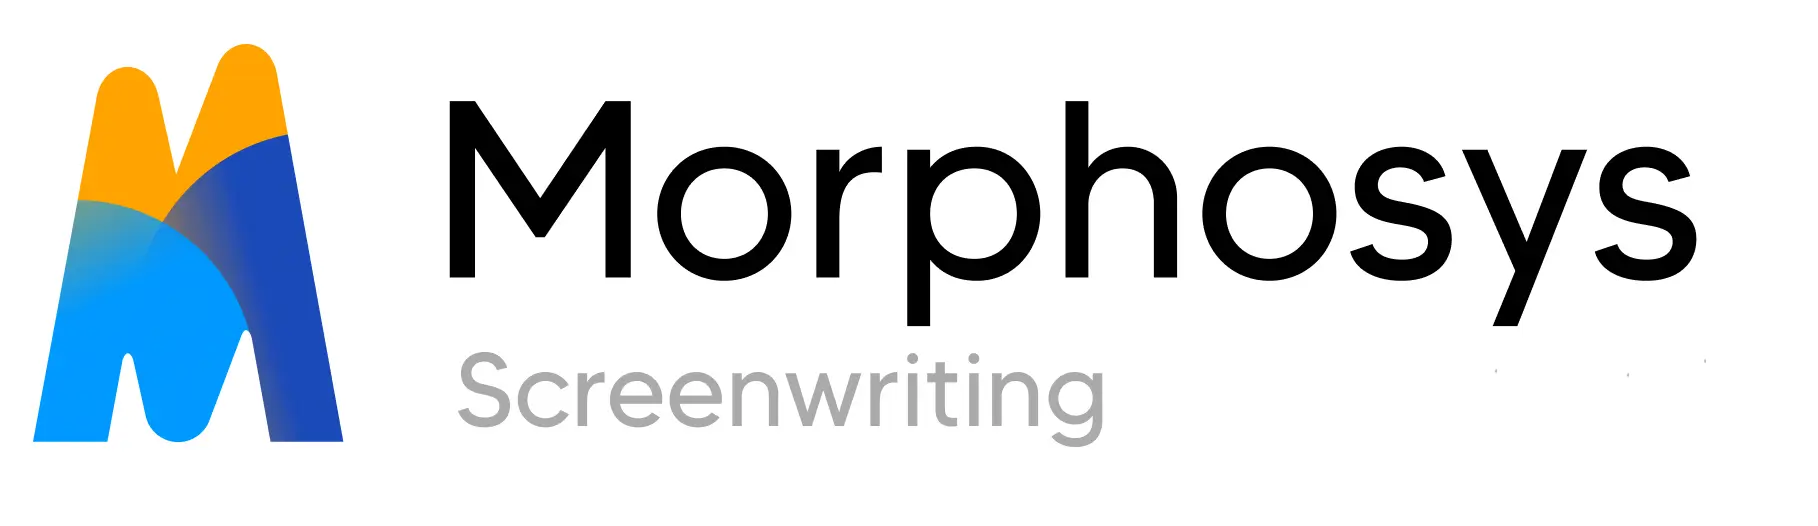 Morphosys manusförfattande logotyp